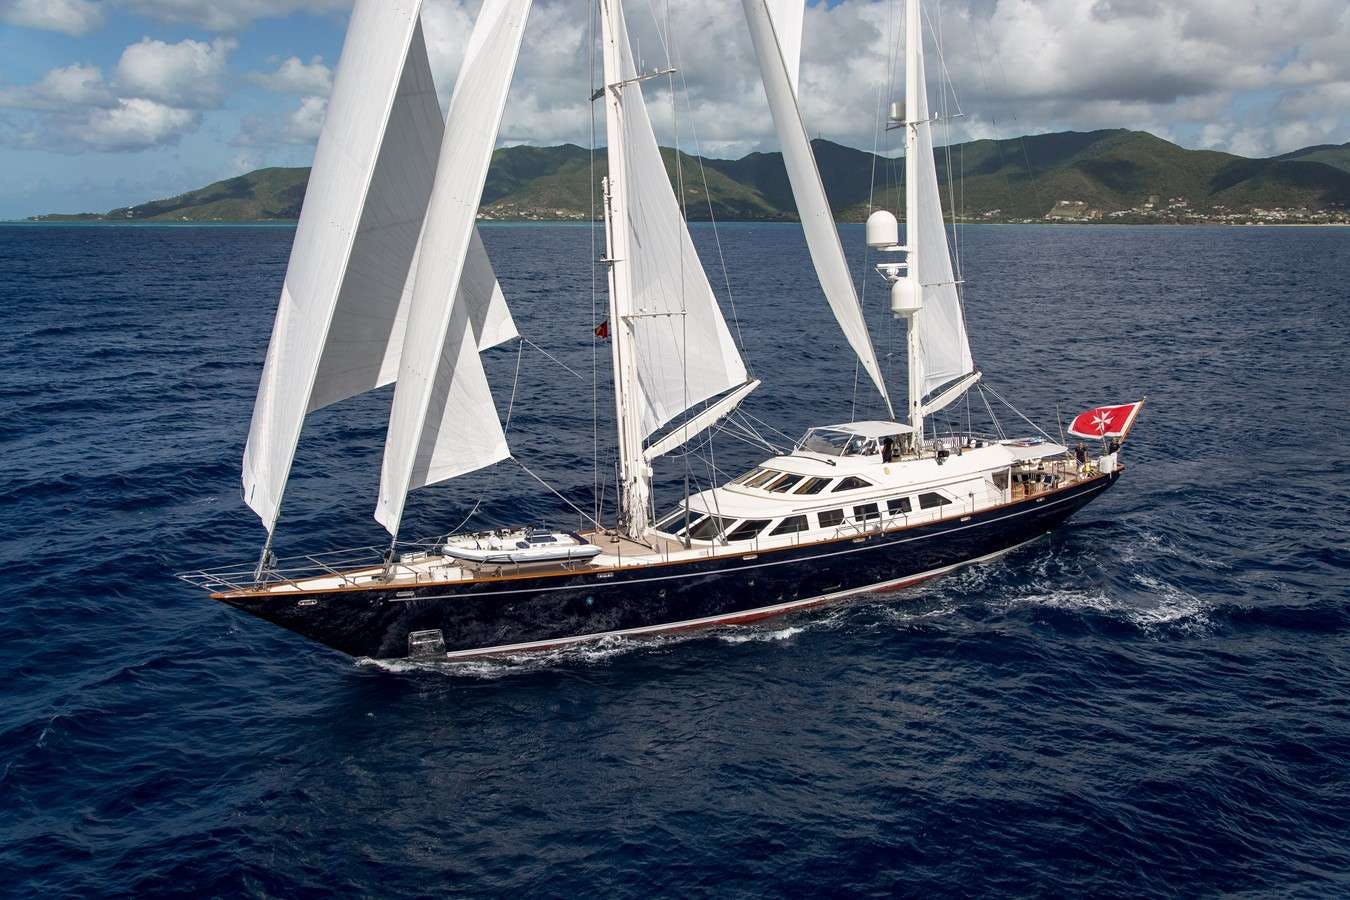 ELLEN - Yacht Charter Caribbean & Boat hire in W. Med -Naples/Sicily, W. Med -Riviera/Cors/Sard., Caribbean Leewards, Caribbean Windwards, Turkey, W. Med - Spain/Balearics, Caribbean Leewards, Caribbean Windwards 1